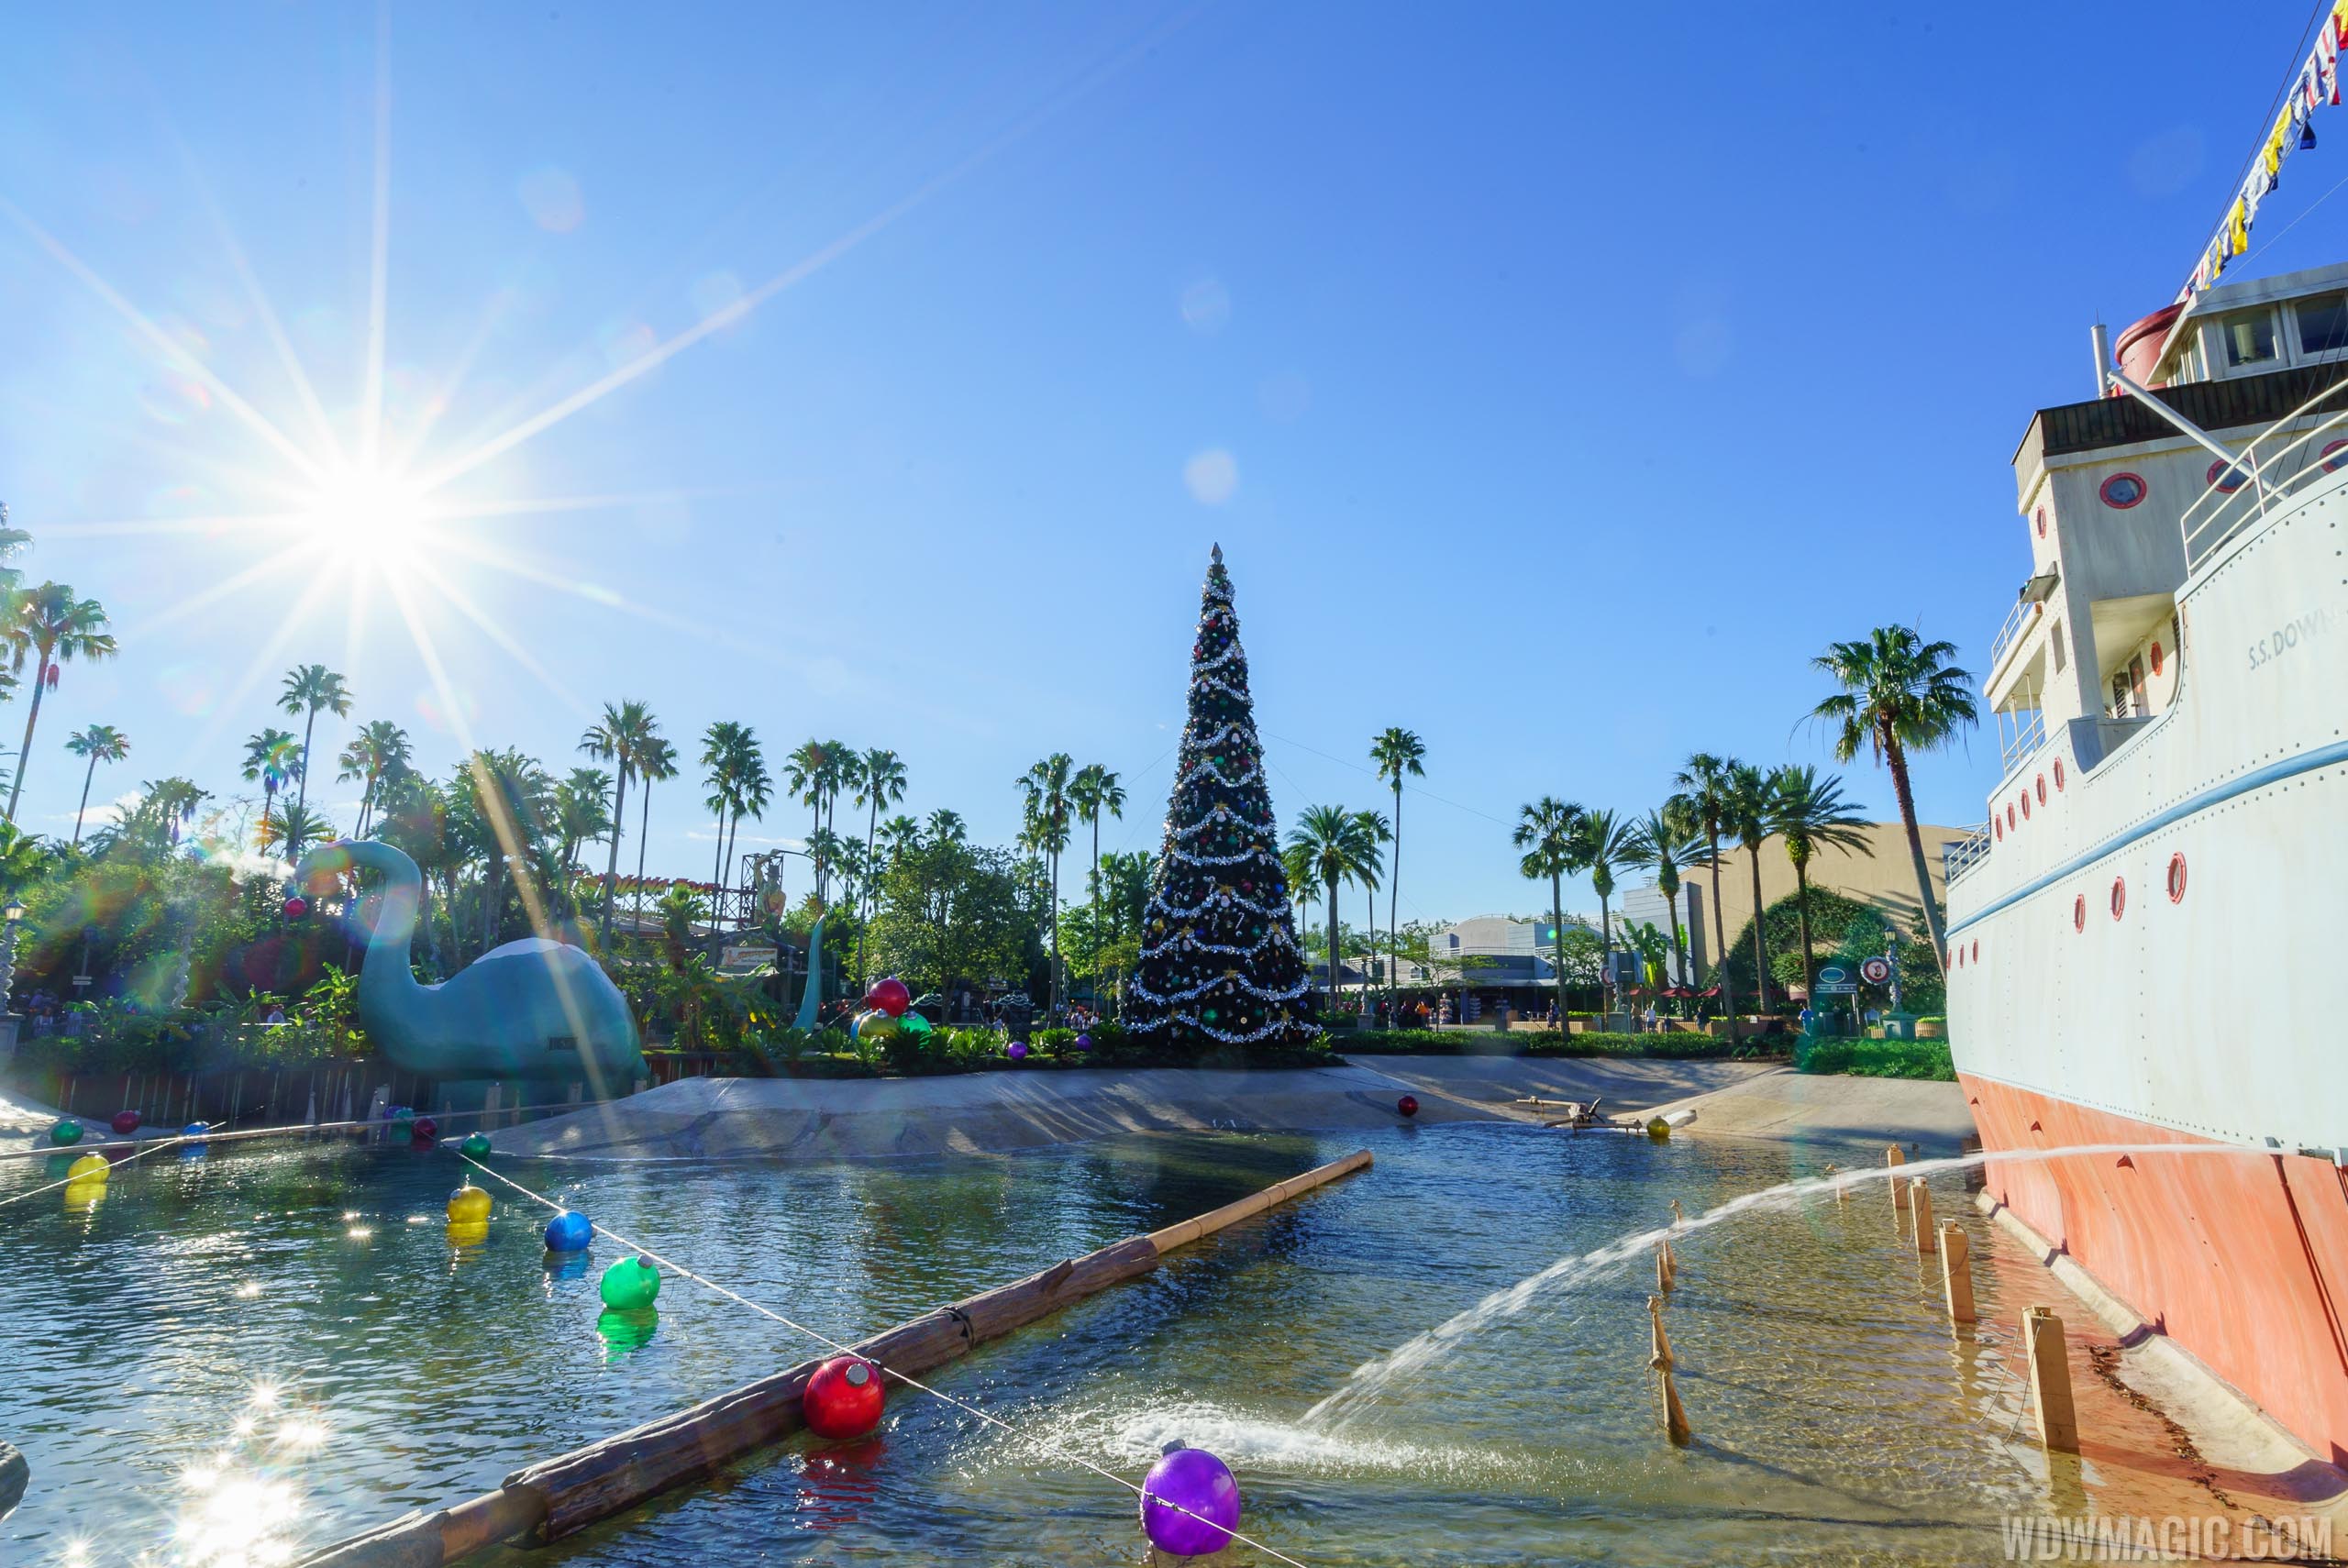 PHOTOS - The new holiday decor debuts on Echo Lake at Disney's